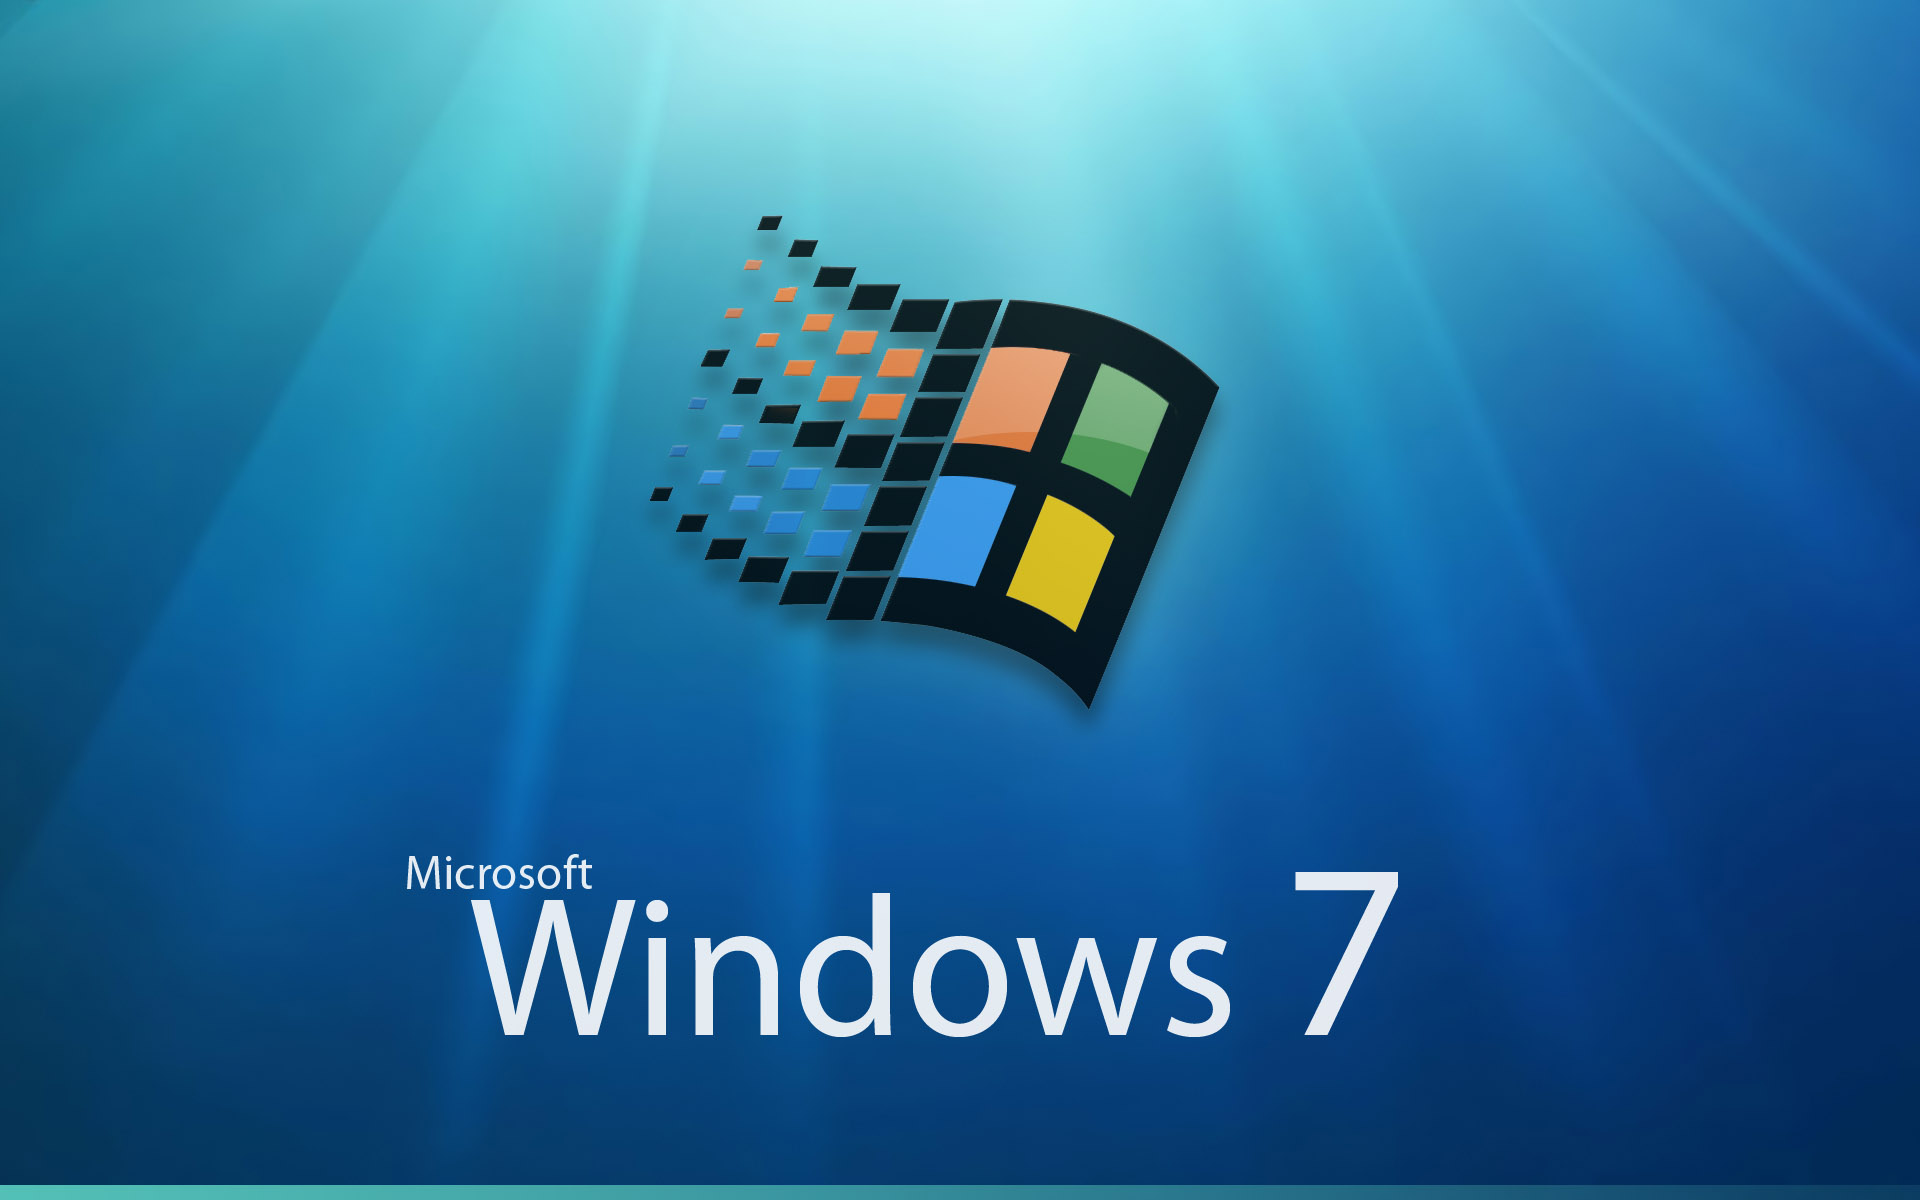 Microsoft Windows 7 logo desktop wallpaper pictures Microsoft Windows 1920x1200